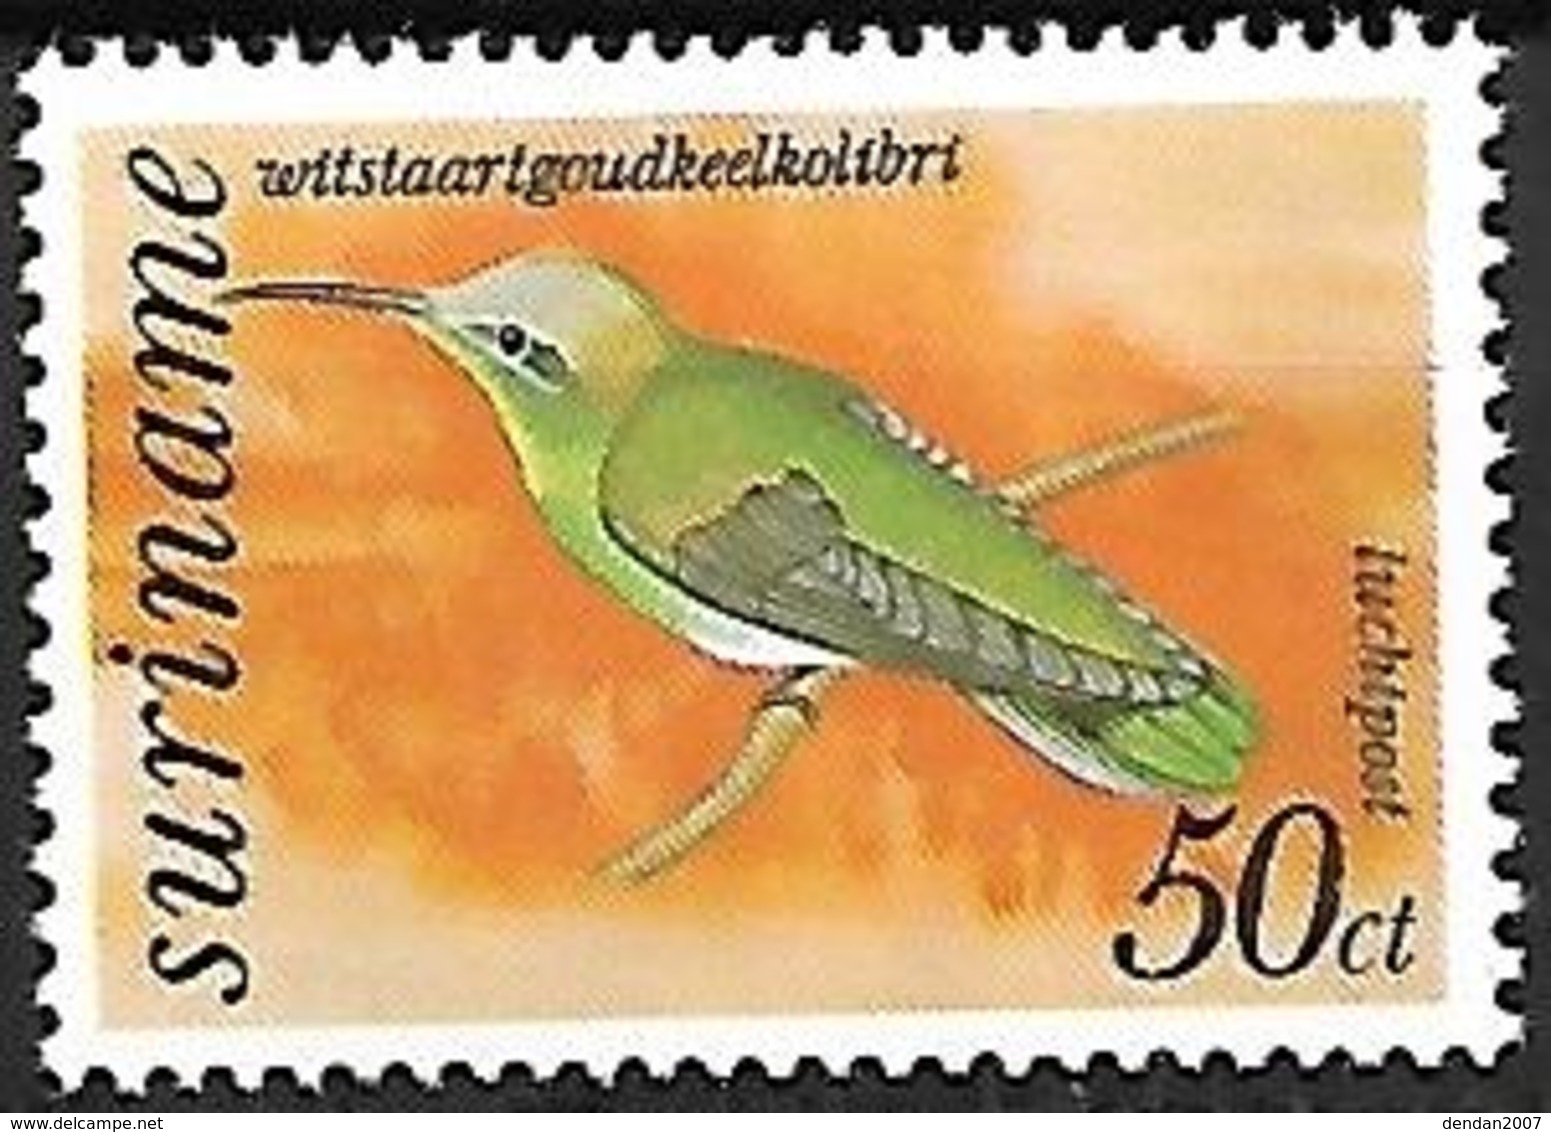 SURINAME - SURINAM - MNH - 1977 : White-tailed Goldenthroat  -  Polytmus Guainumbi - Colibríes